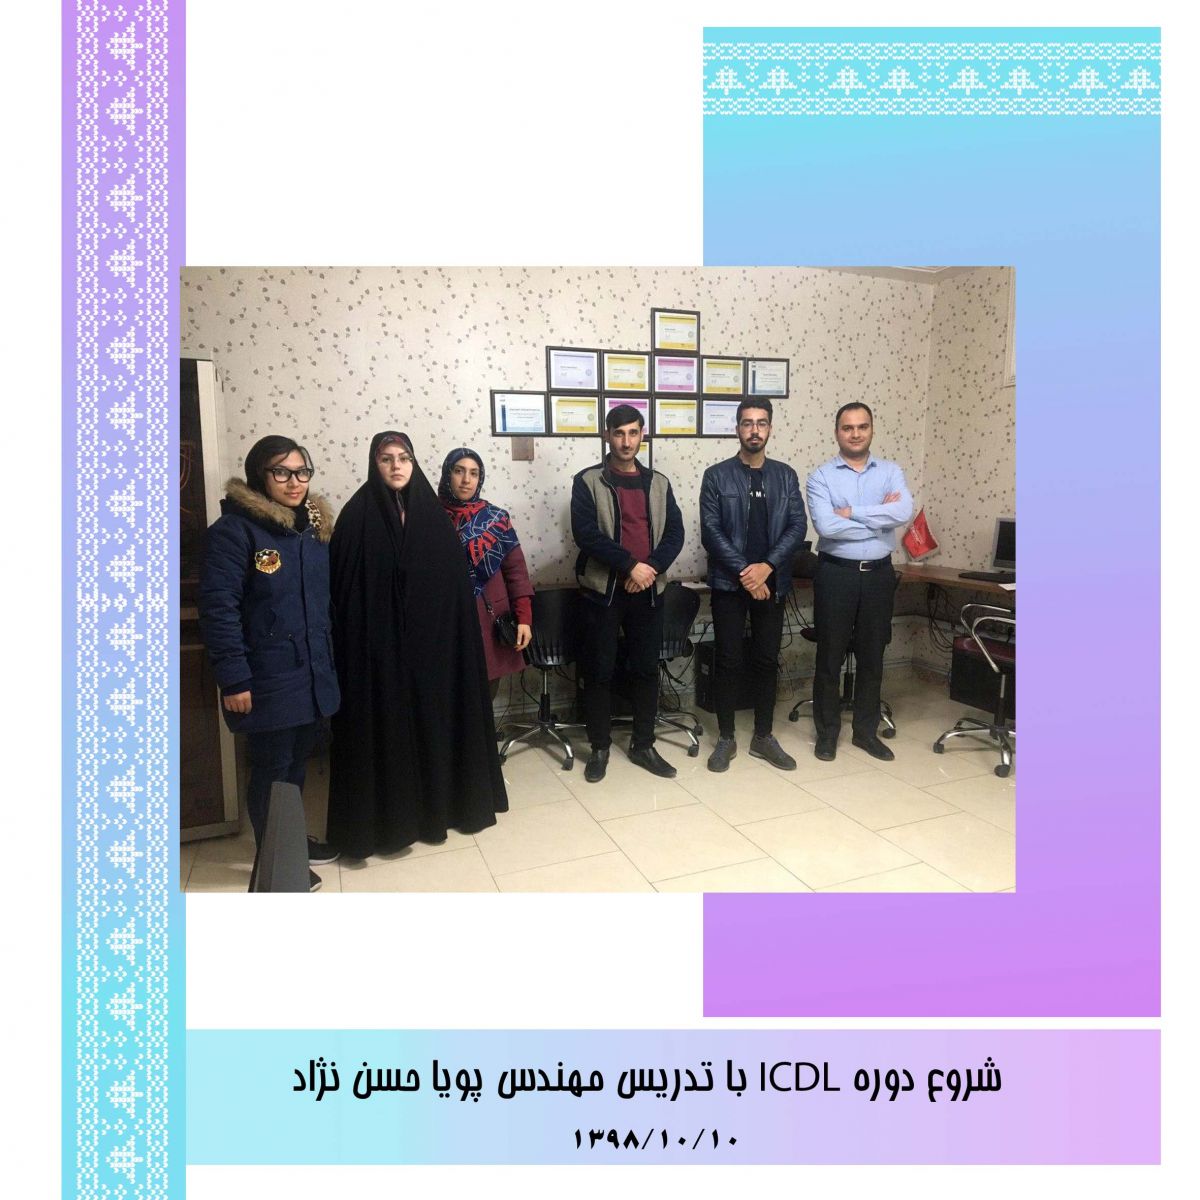 شروع دوره ICDL با تدریس مهندس پویا حسن نژاد